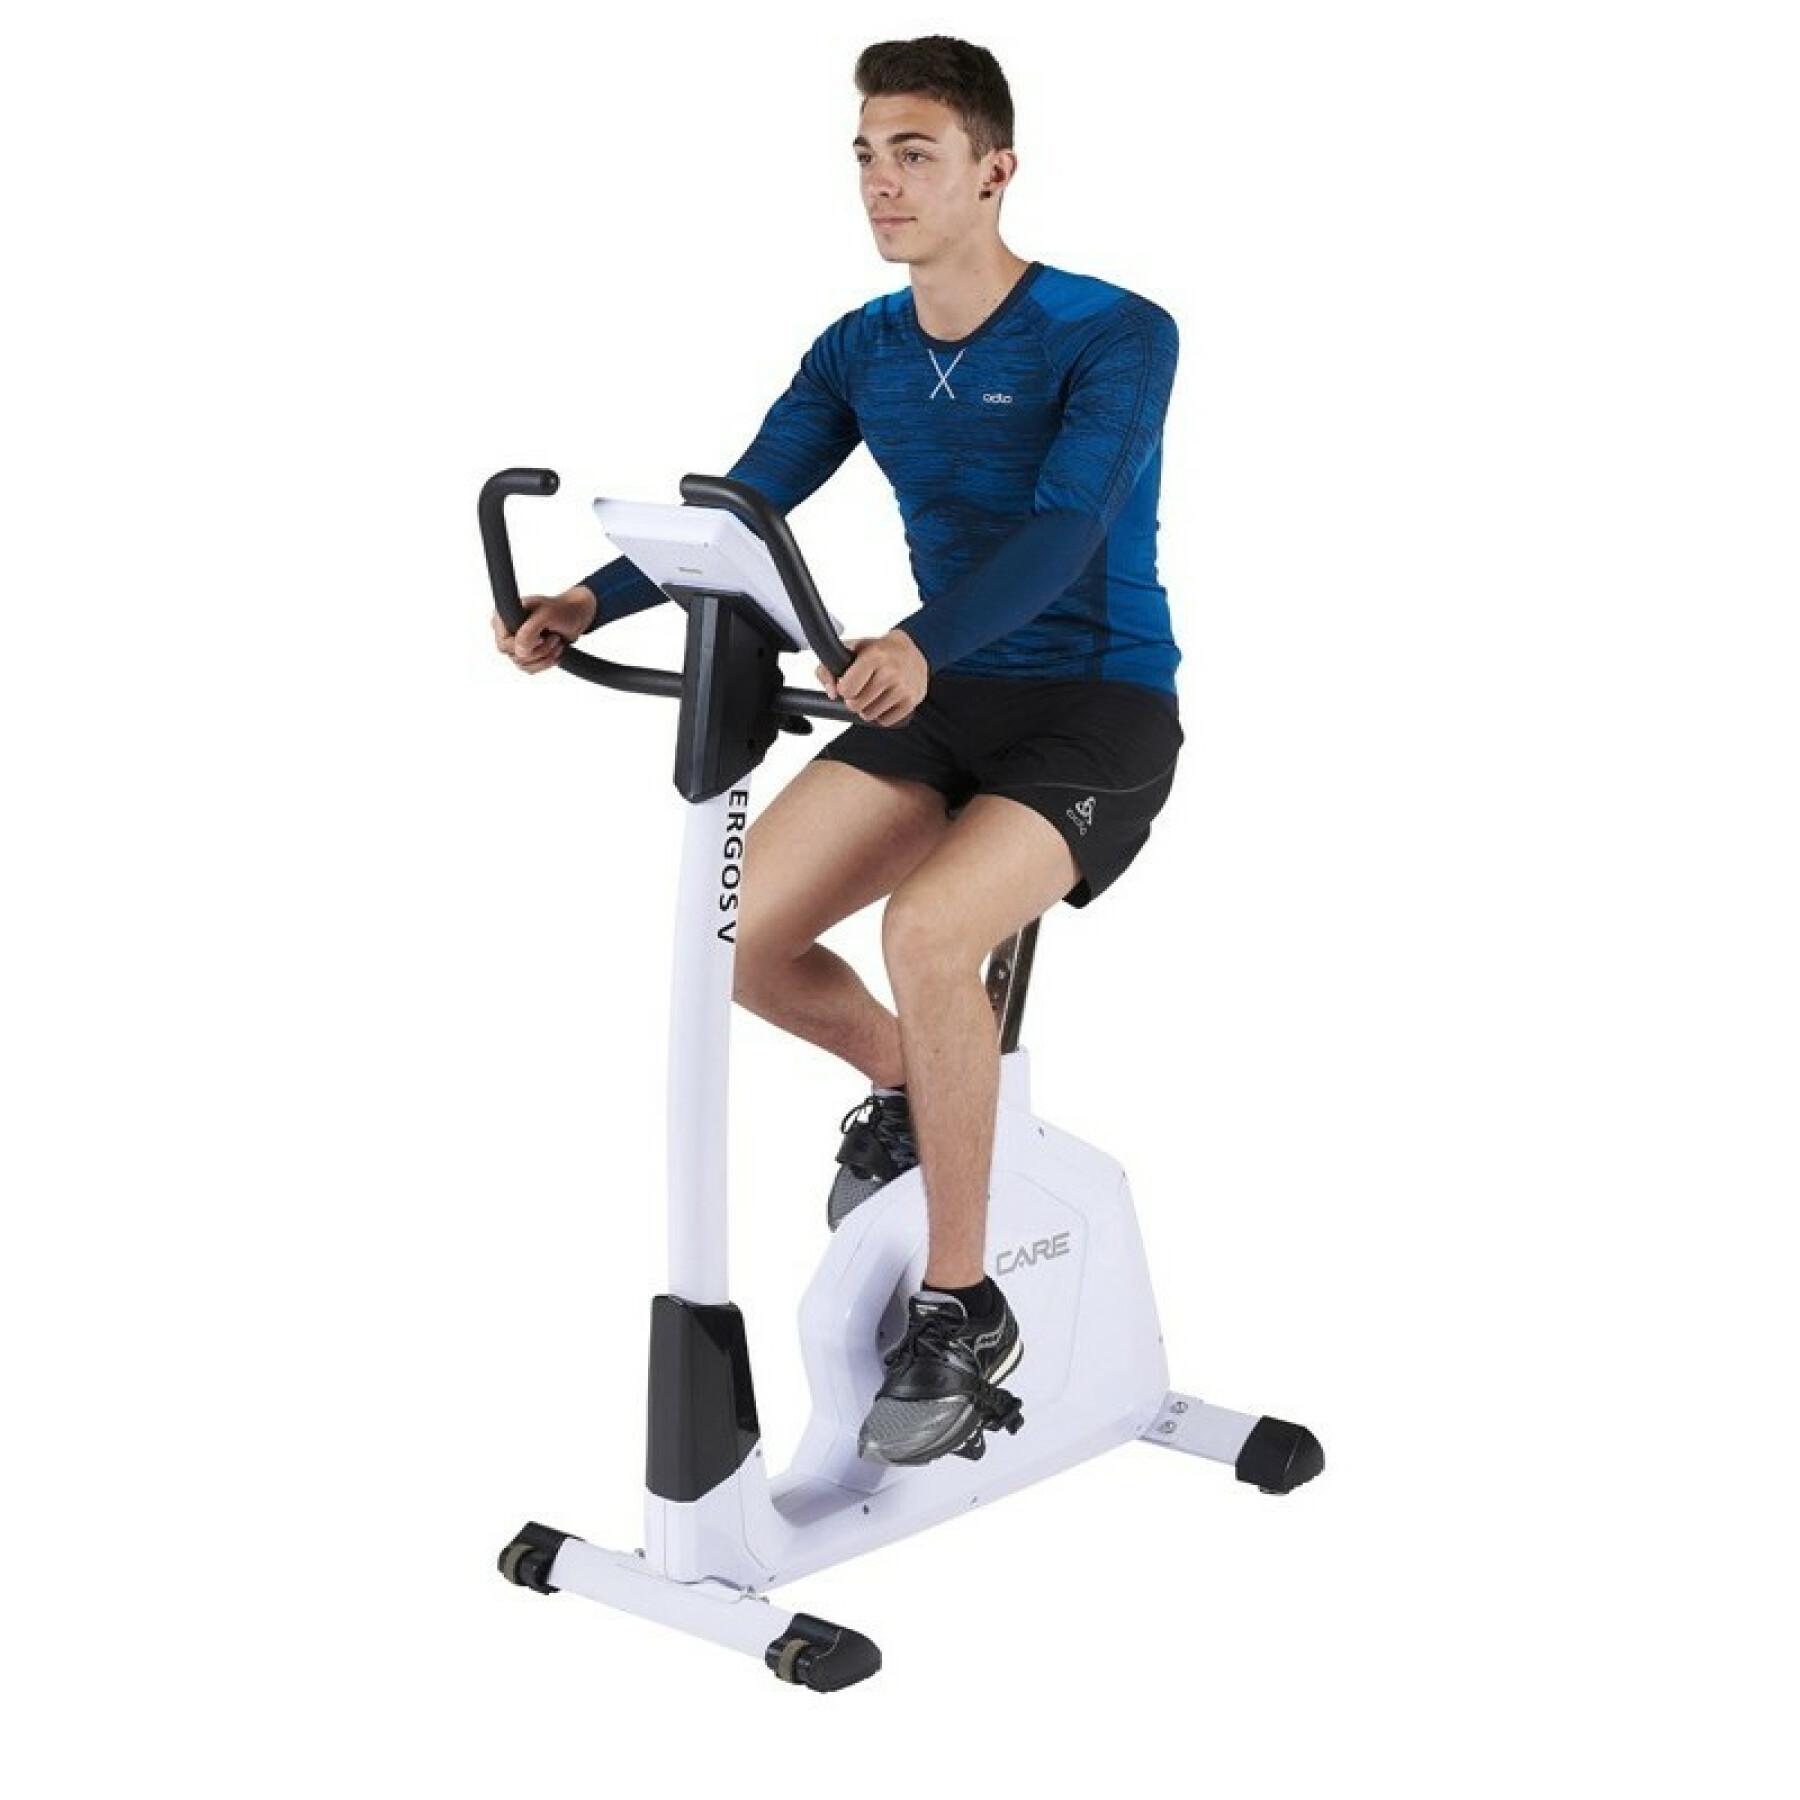 Motionscykel Care Fitness Ergos V